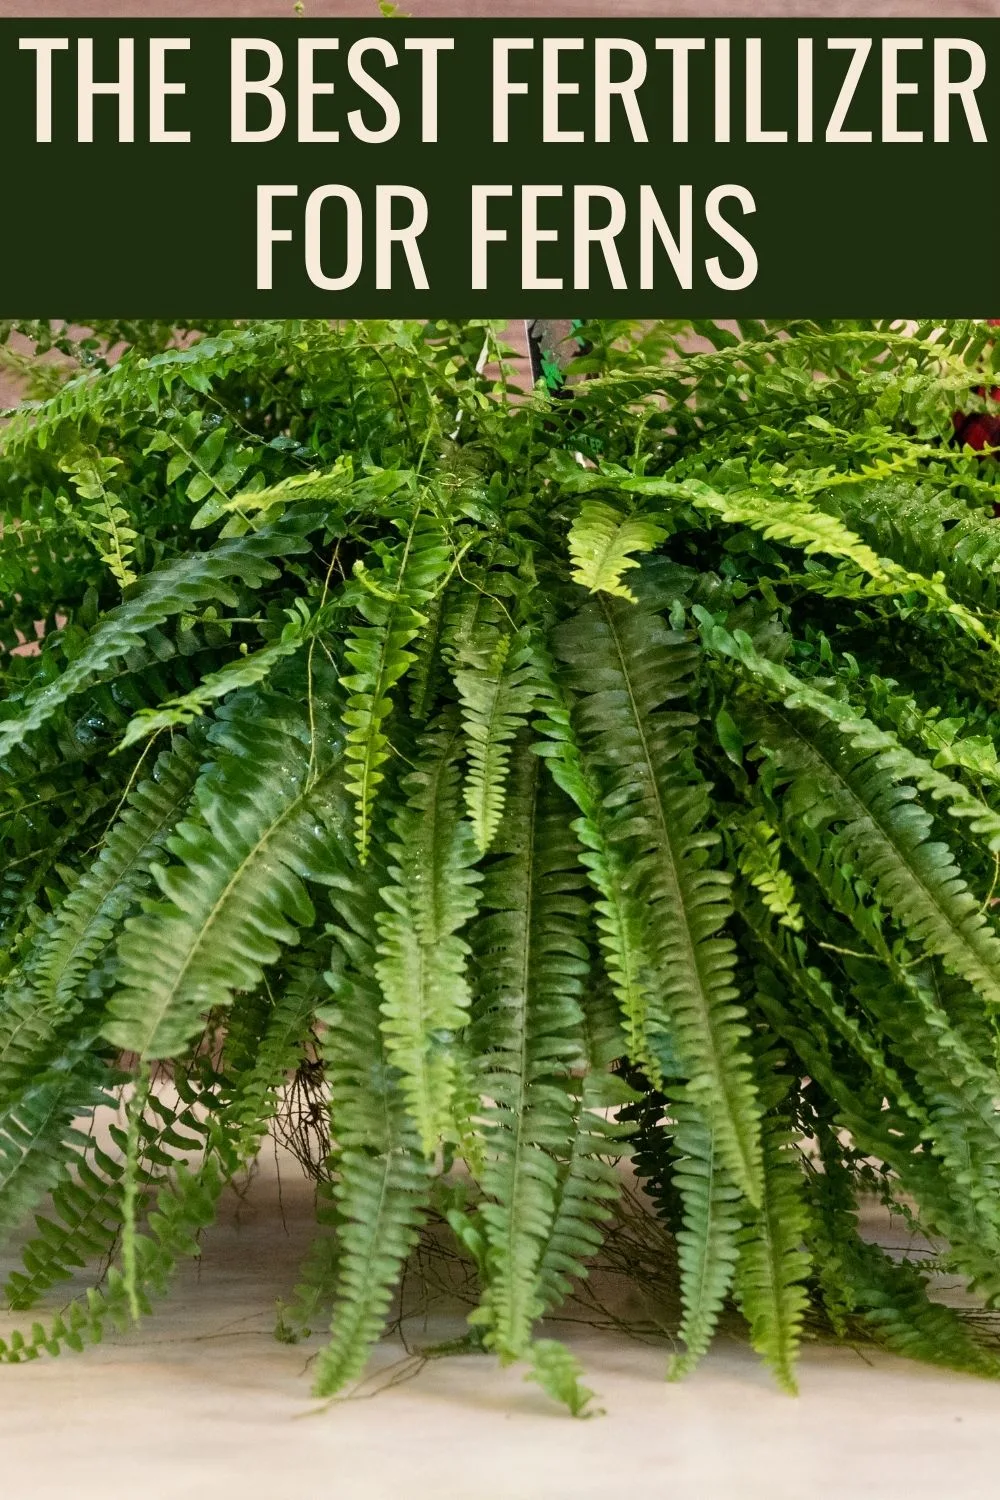 The best fertilizer for ferns